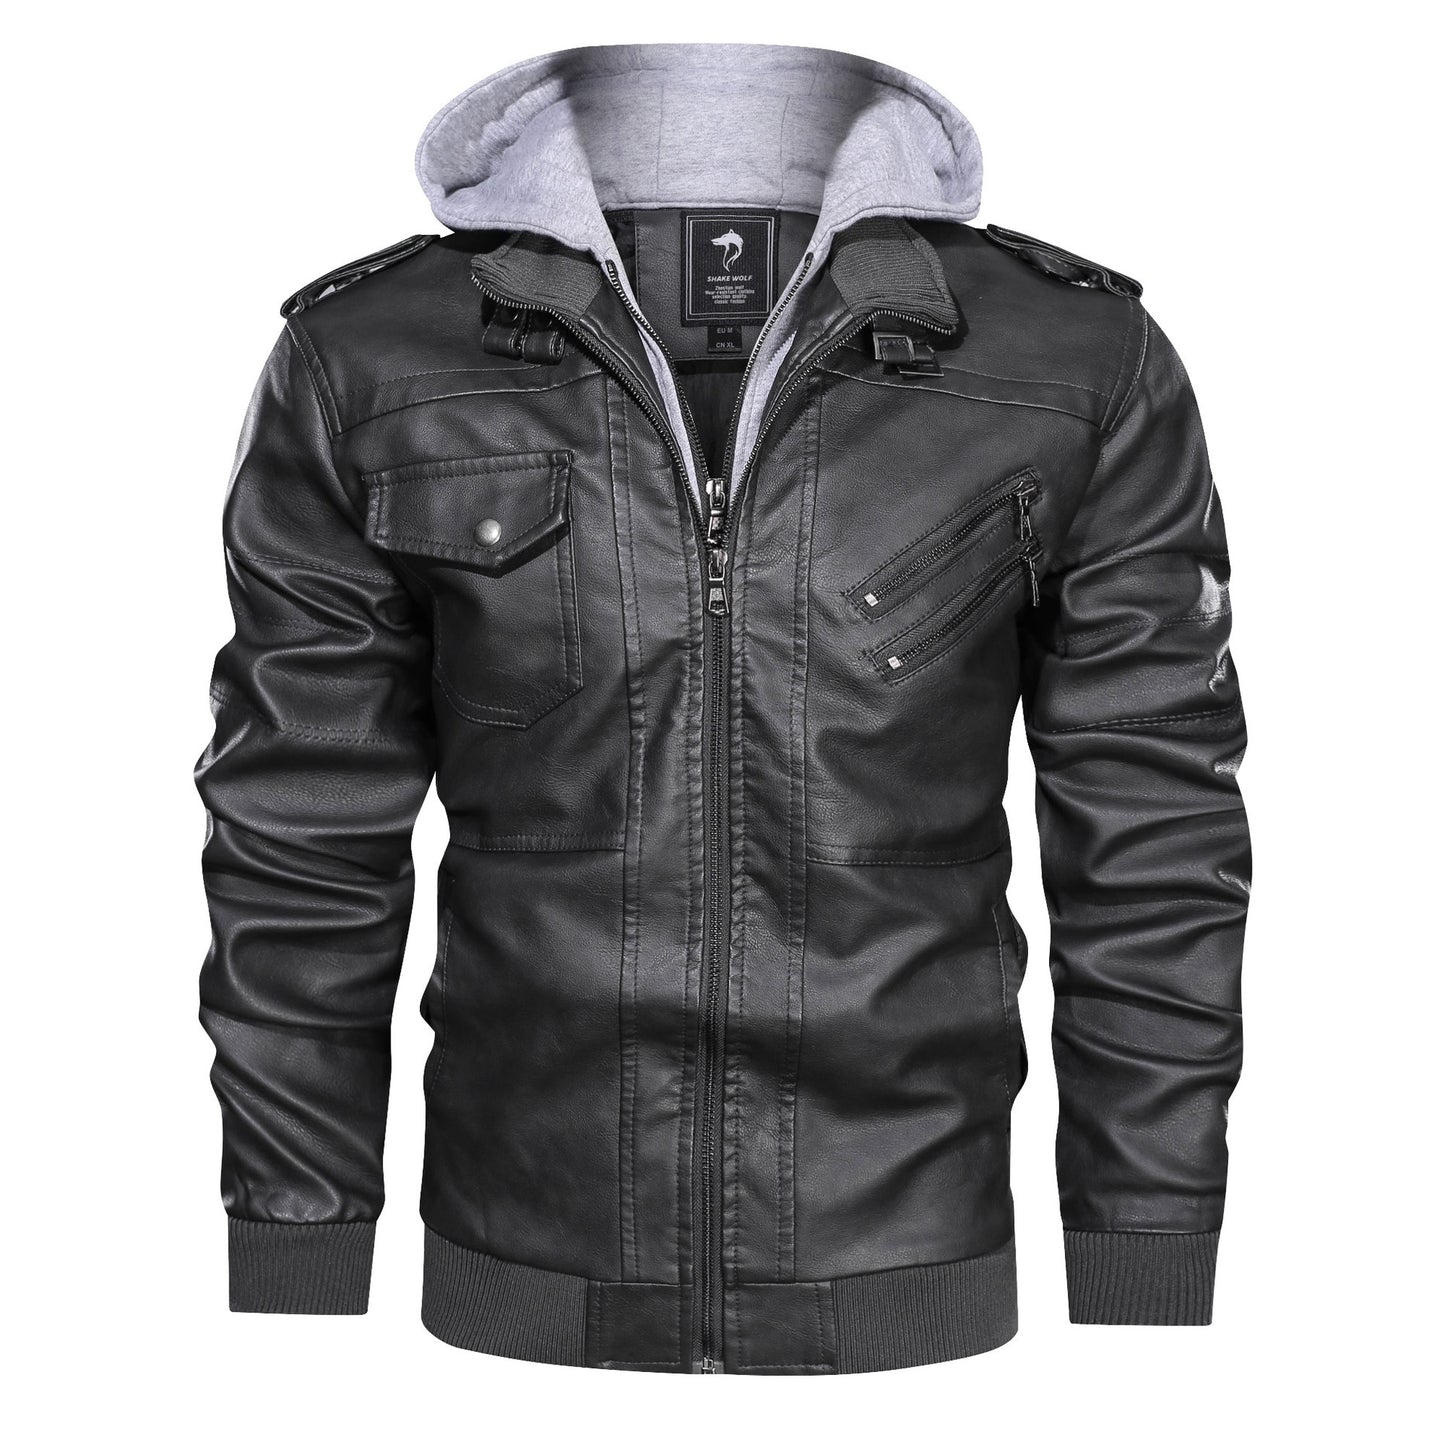 New Men's Liner PU Leather Jackets Coats with Hood Autumn spring Casual Motorcycle Jacket For Men Windbreaker Biker Jackets - Bekro's ART